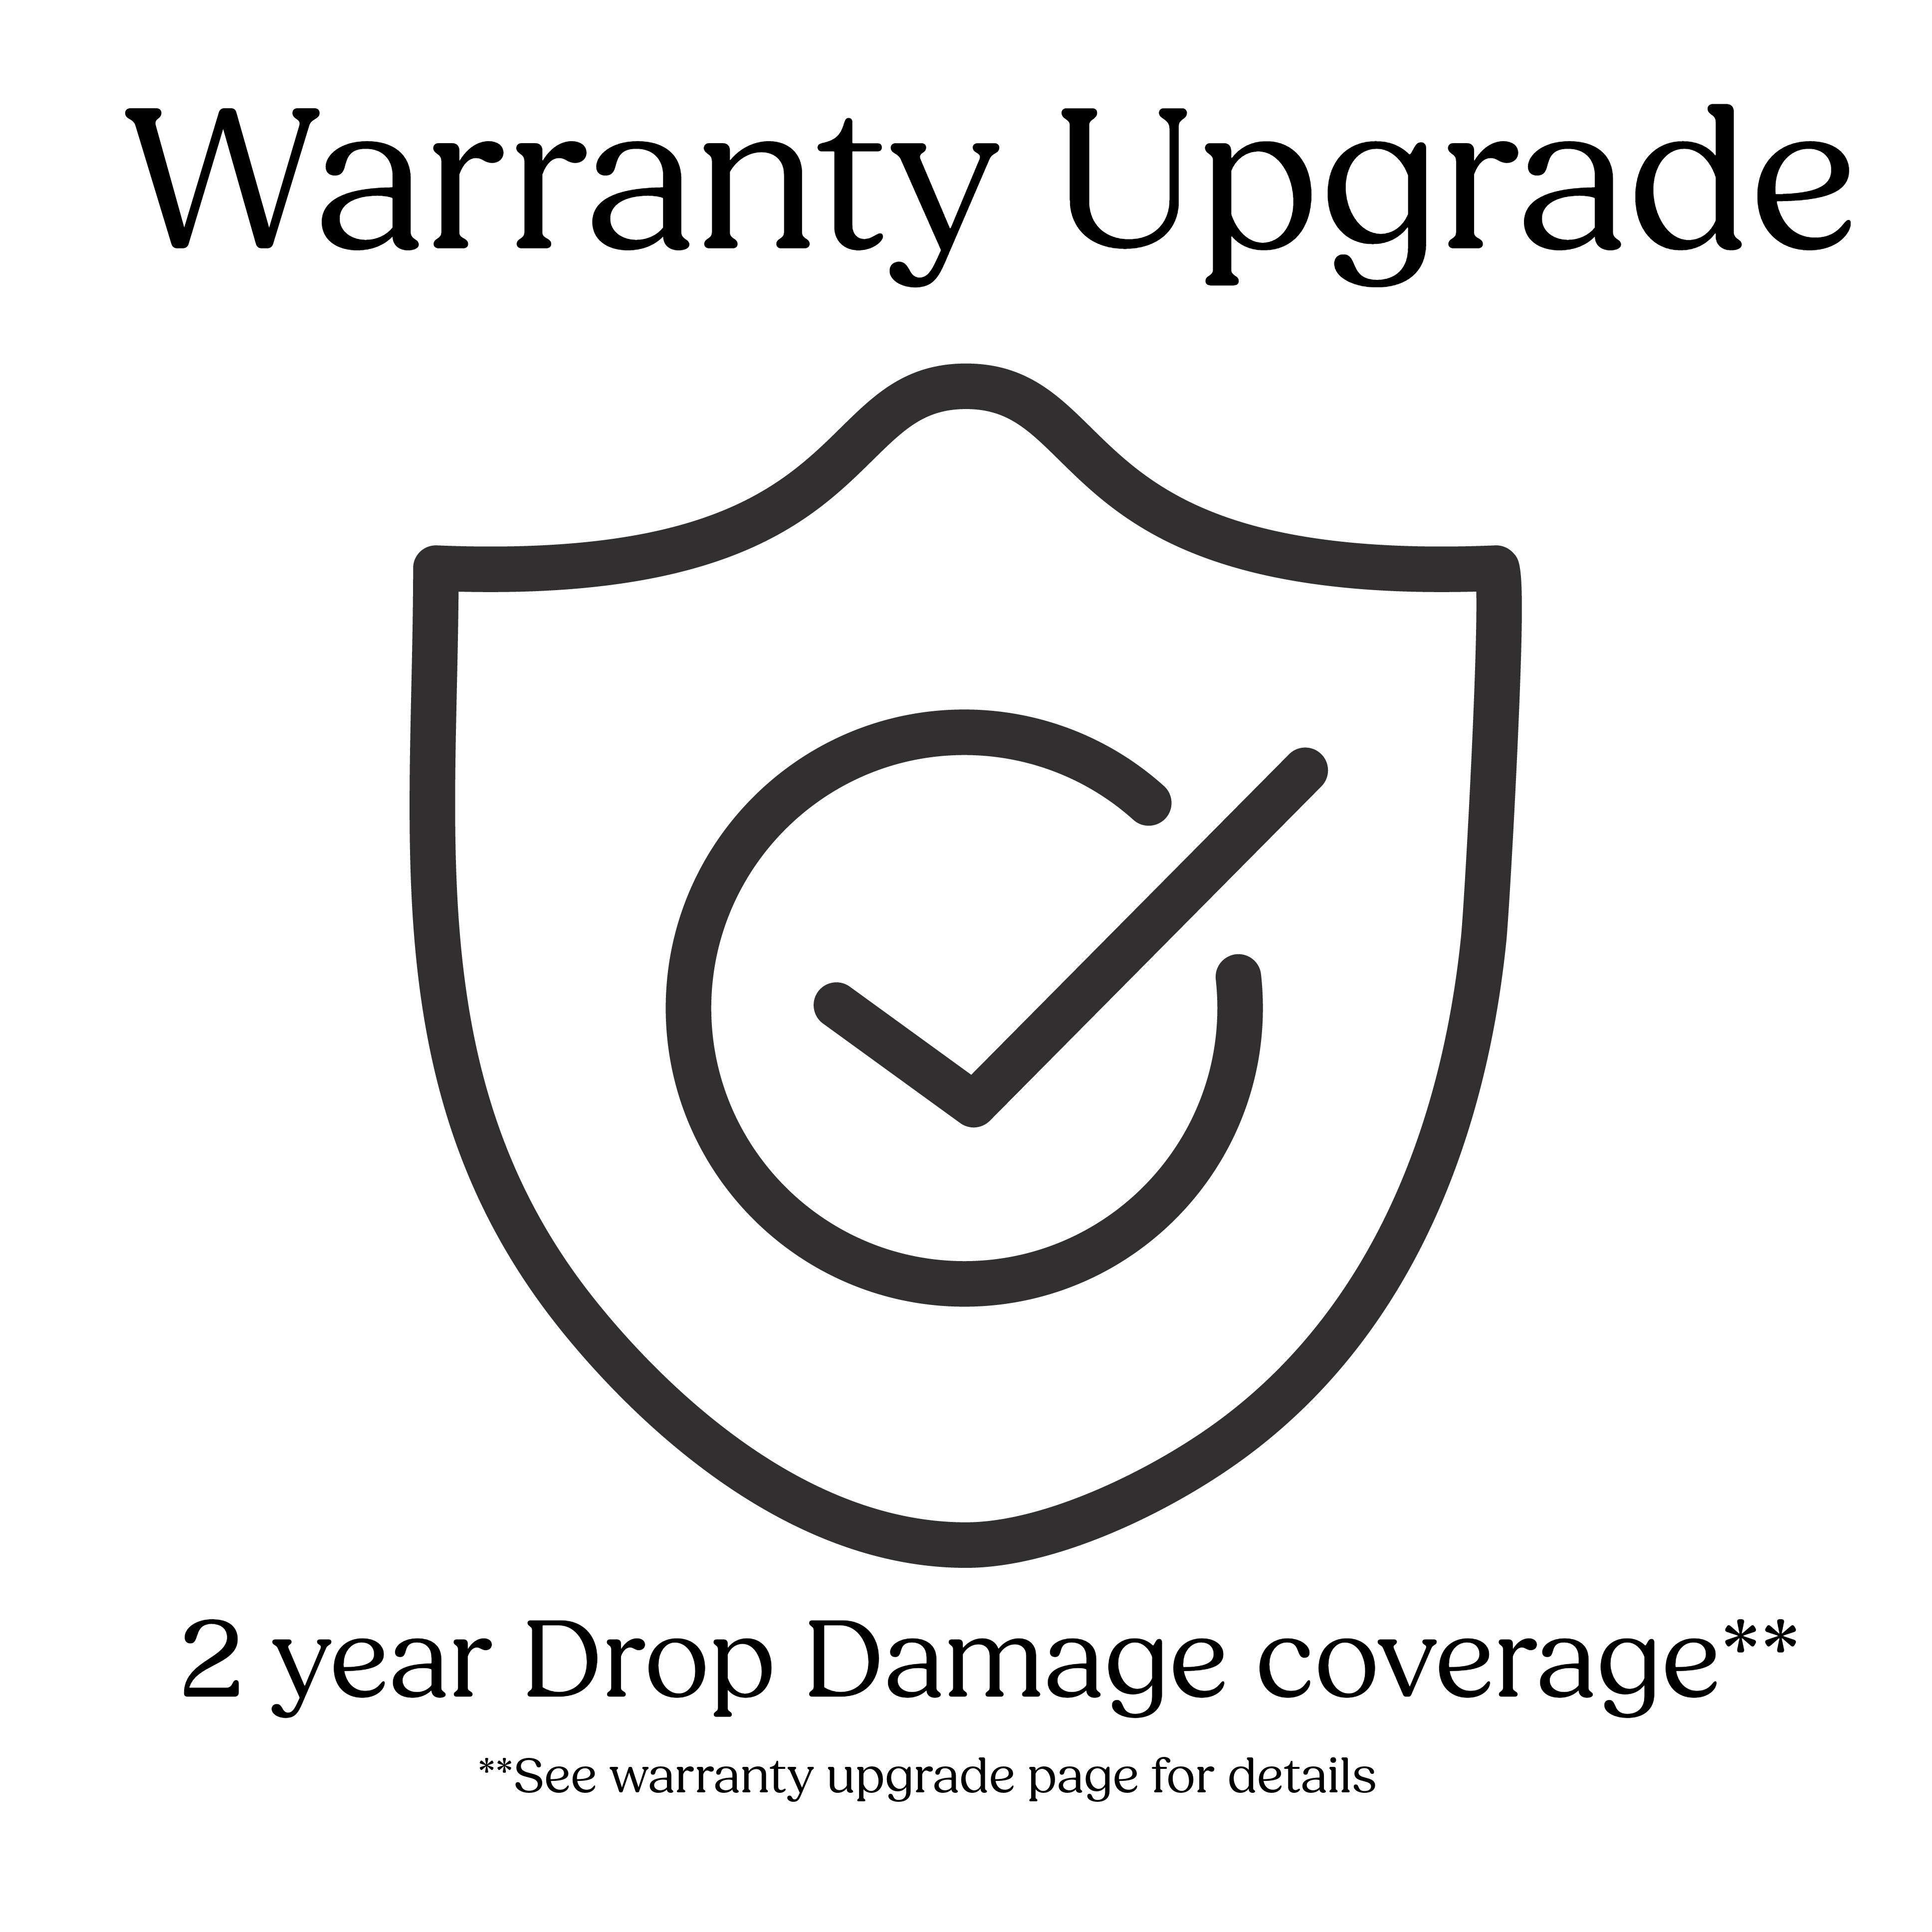 warranty upgrade 2 year drop damage coverage